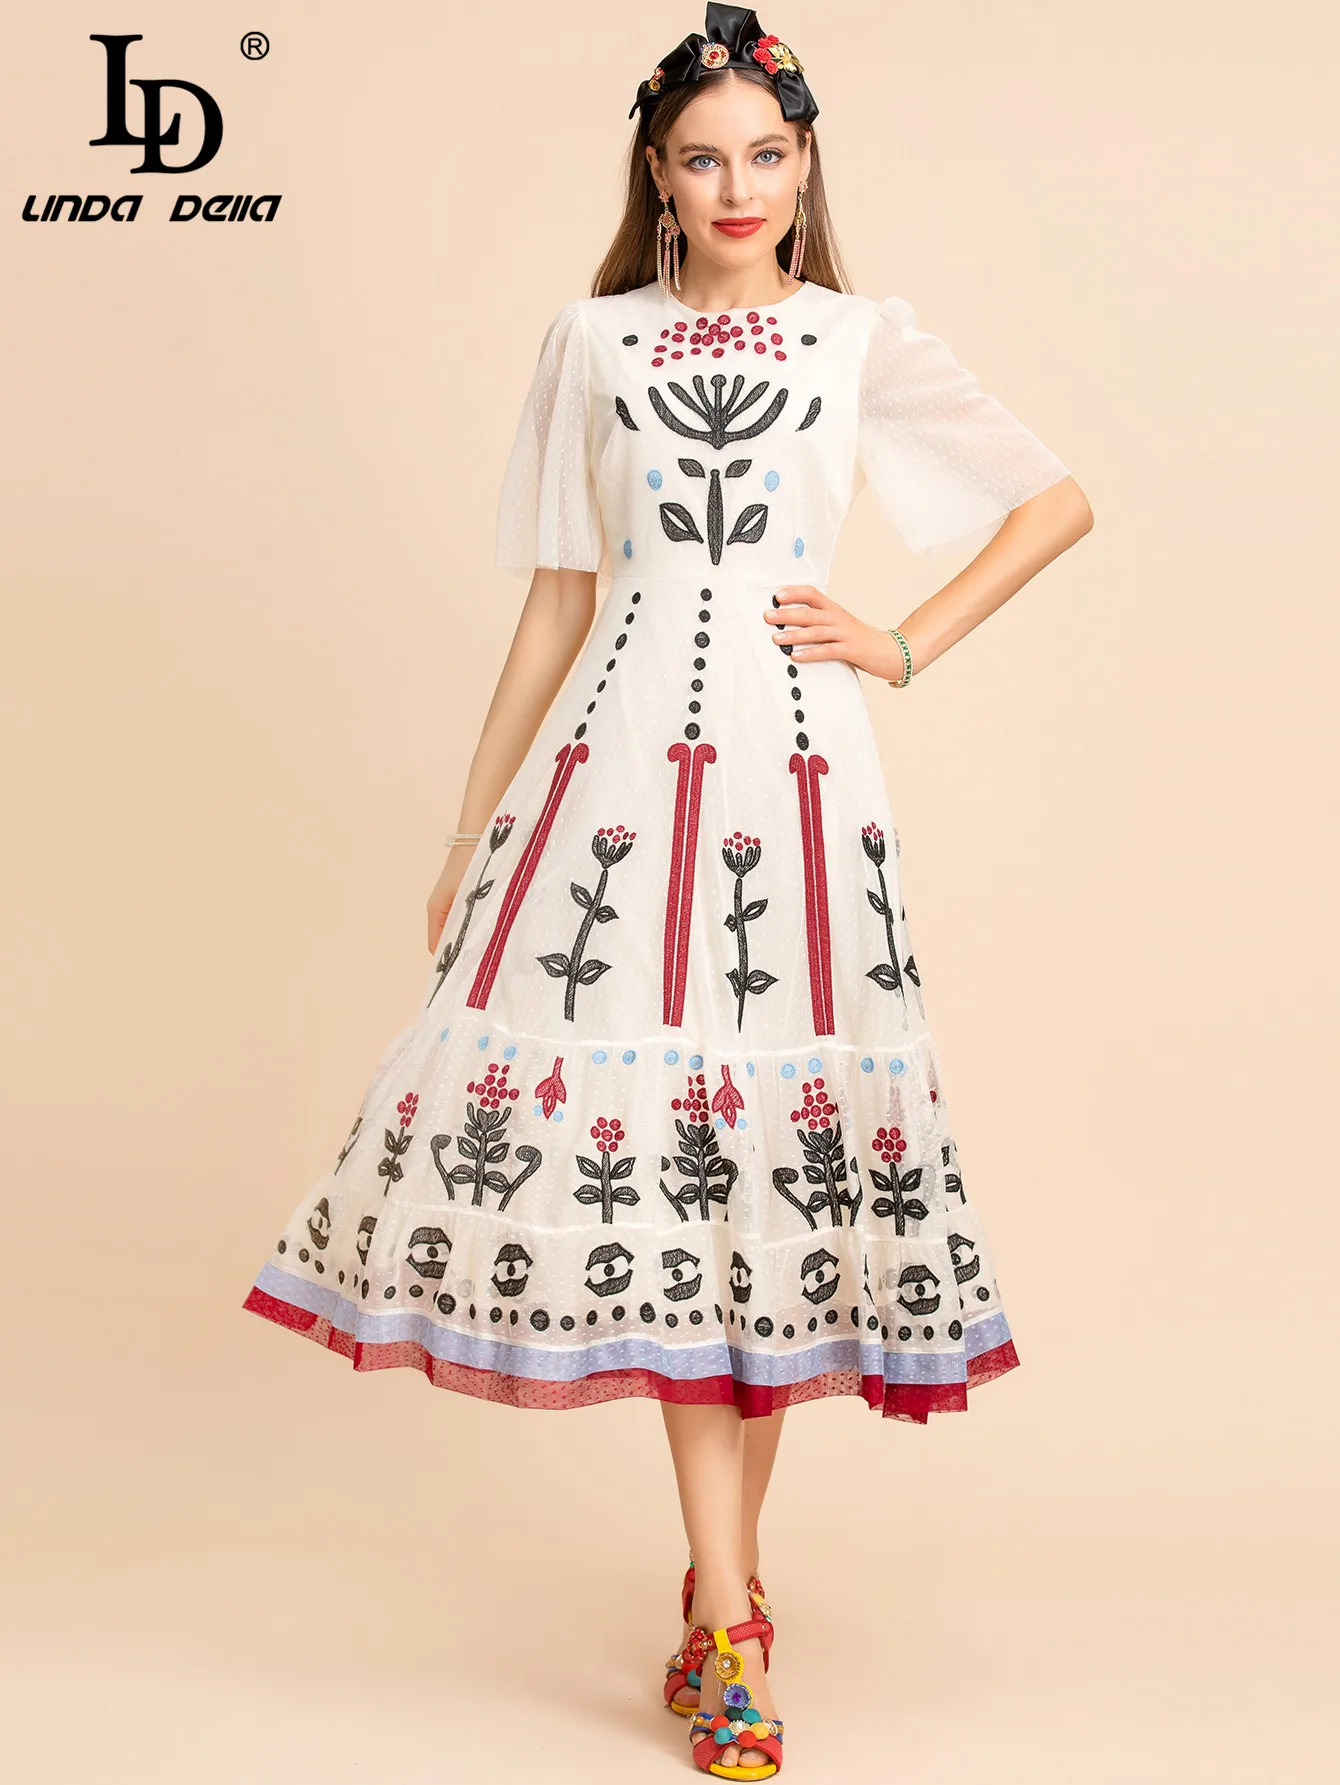 

LD LINDA DELLA Summer Runway Fashion Mesh Dress Women Short sleeve Vintage Polka dot Flower Embroidery Elegant Party Midi Dress